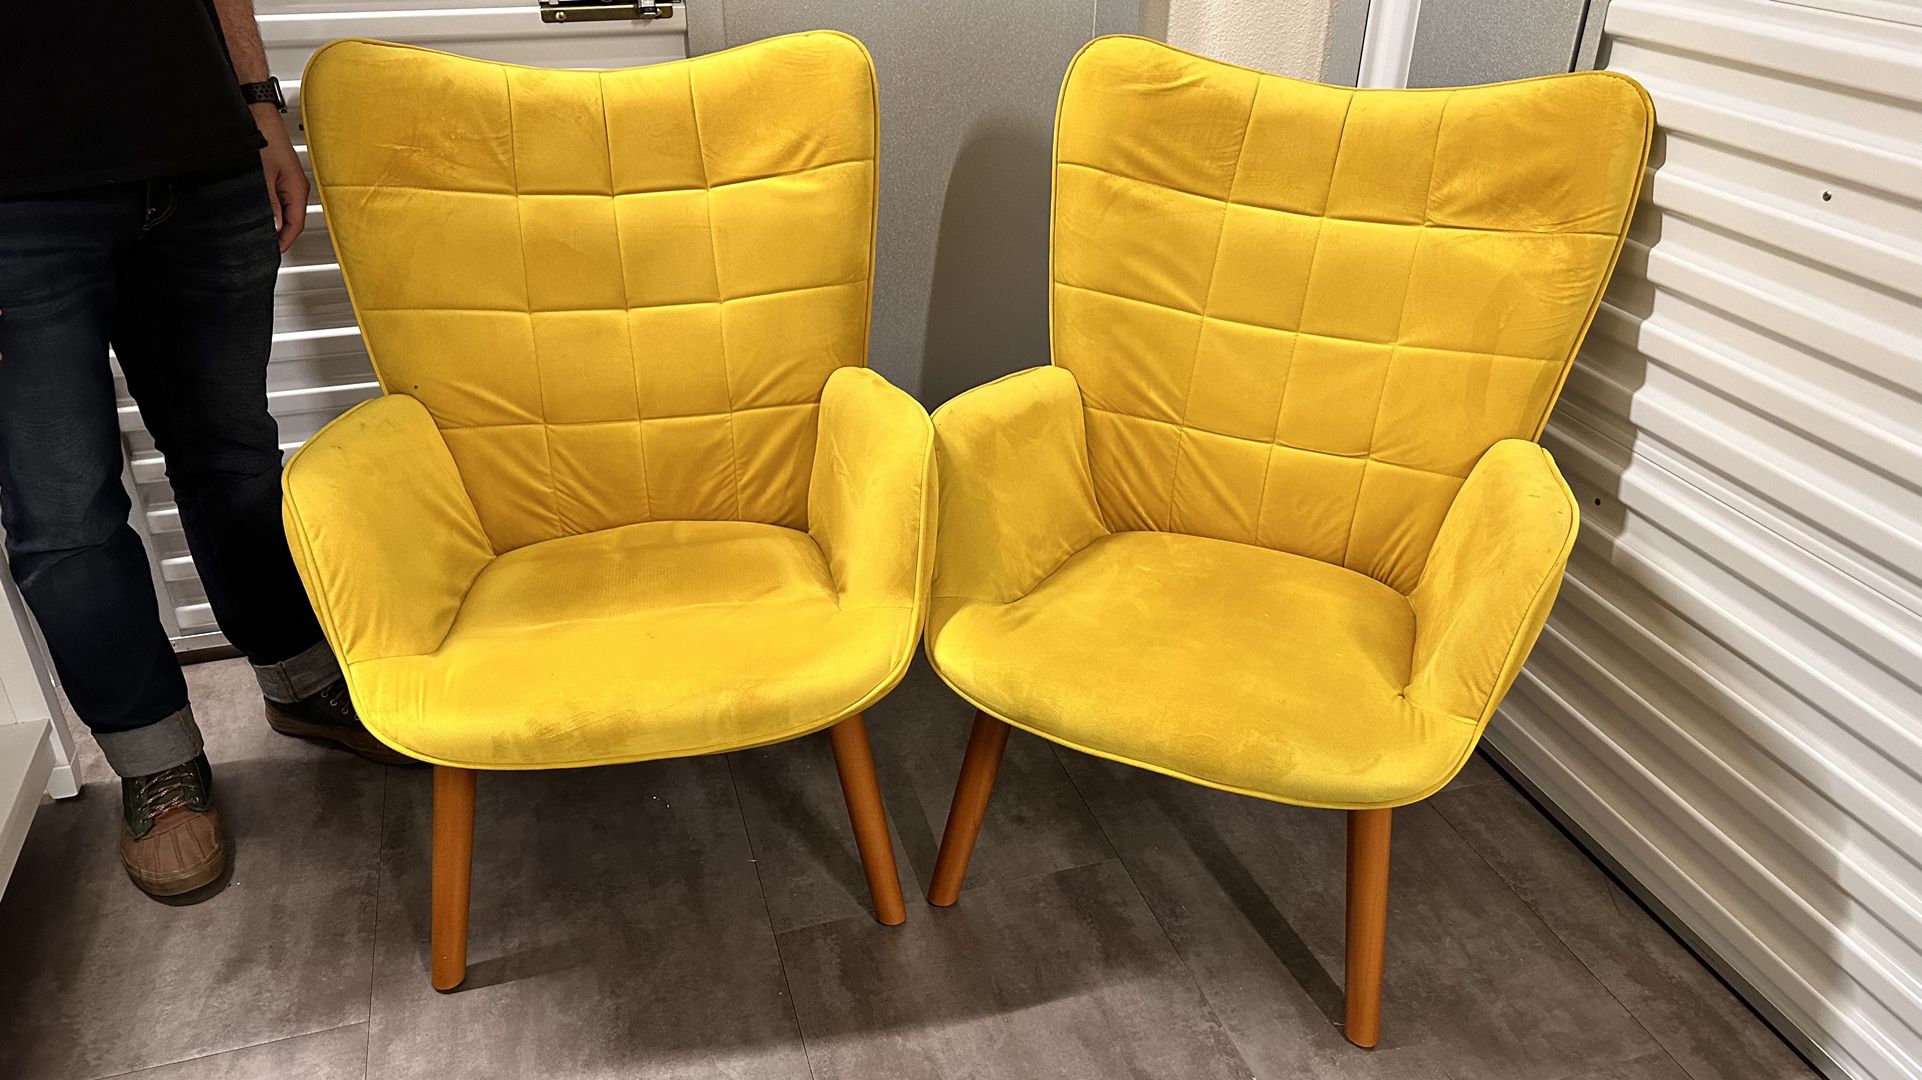 Battistina Velvet Armchair with Ottoman, Mid-Century Modern Yellow Chairs x2